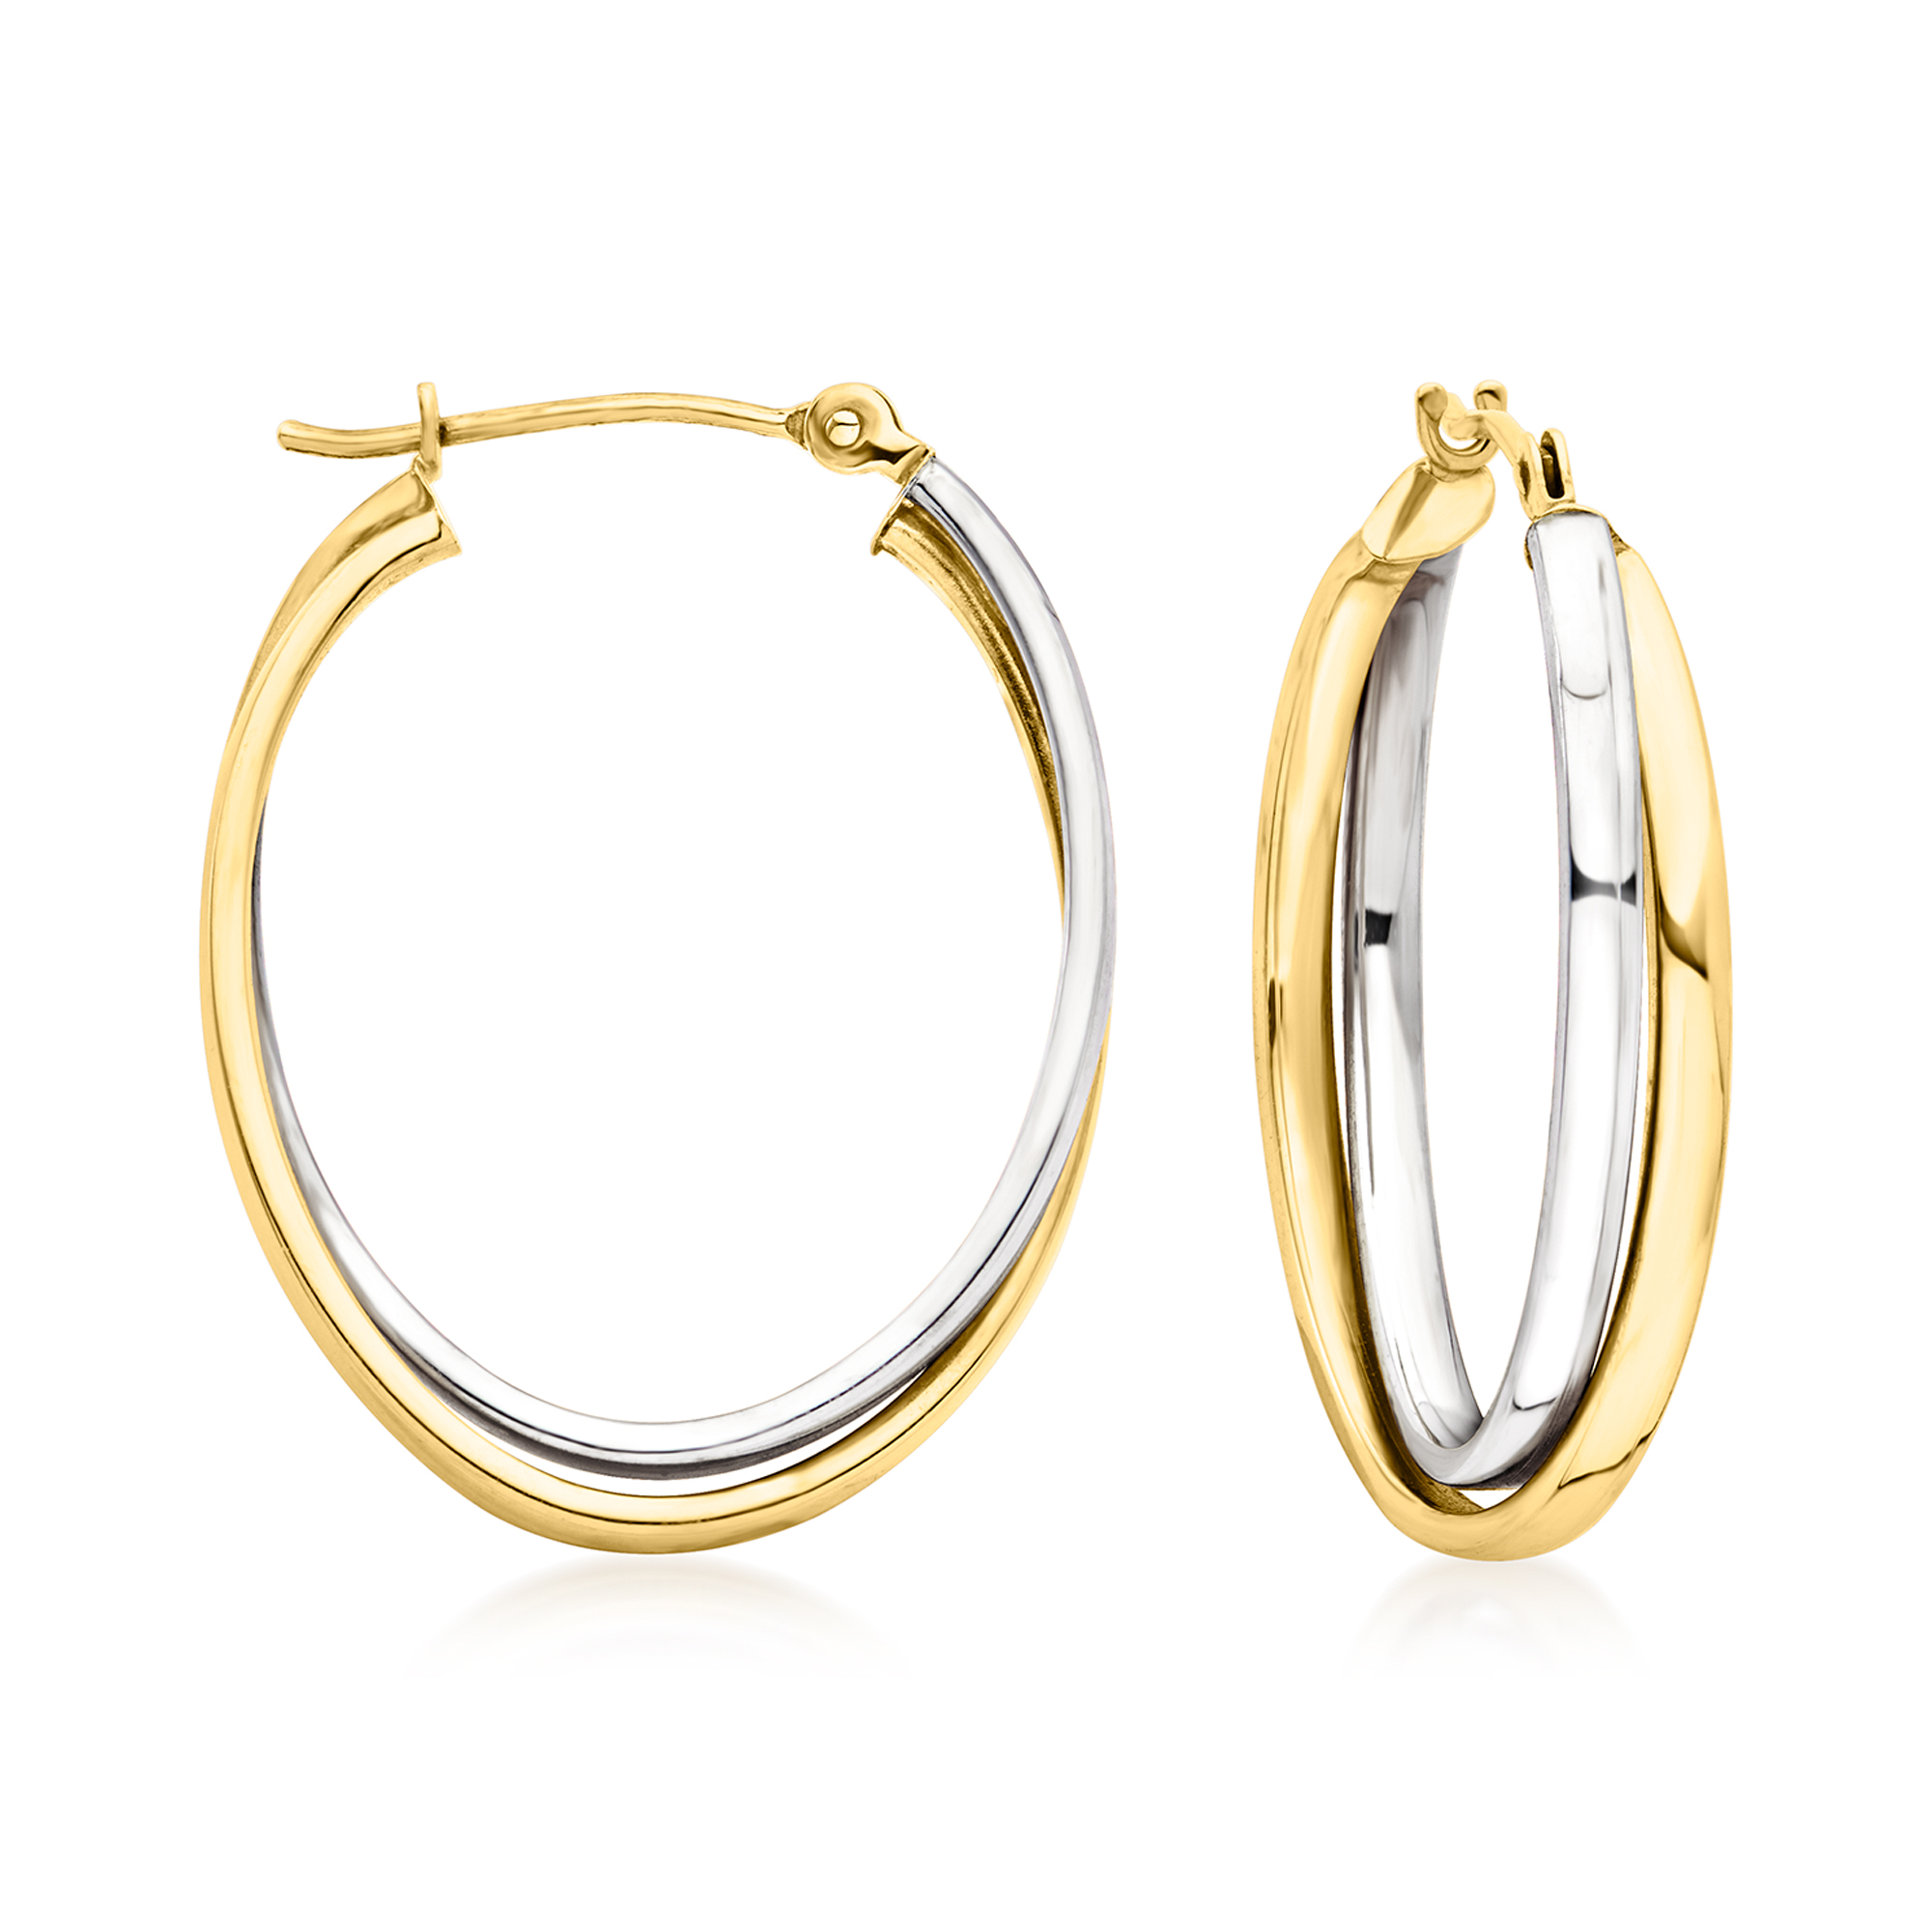 14kt Two-Tone Gold Double-Oval Hoop Earrings. 1 1/8" | Ross-Simons